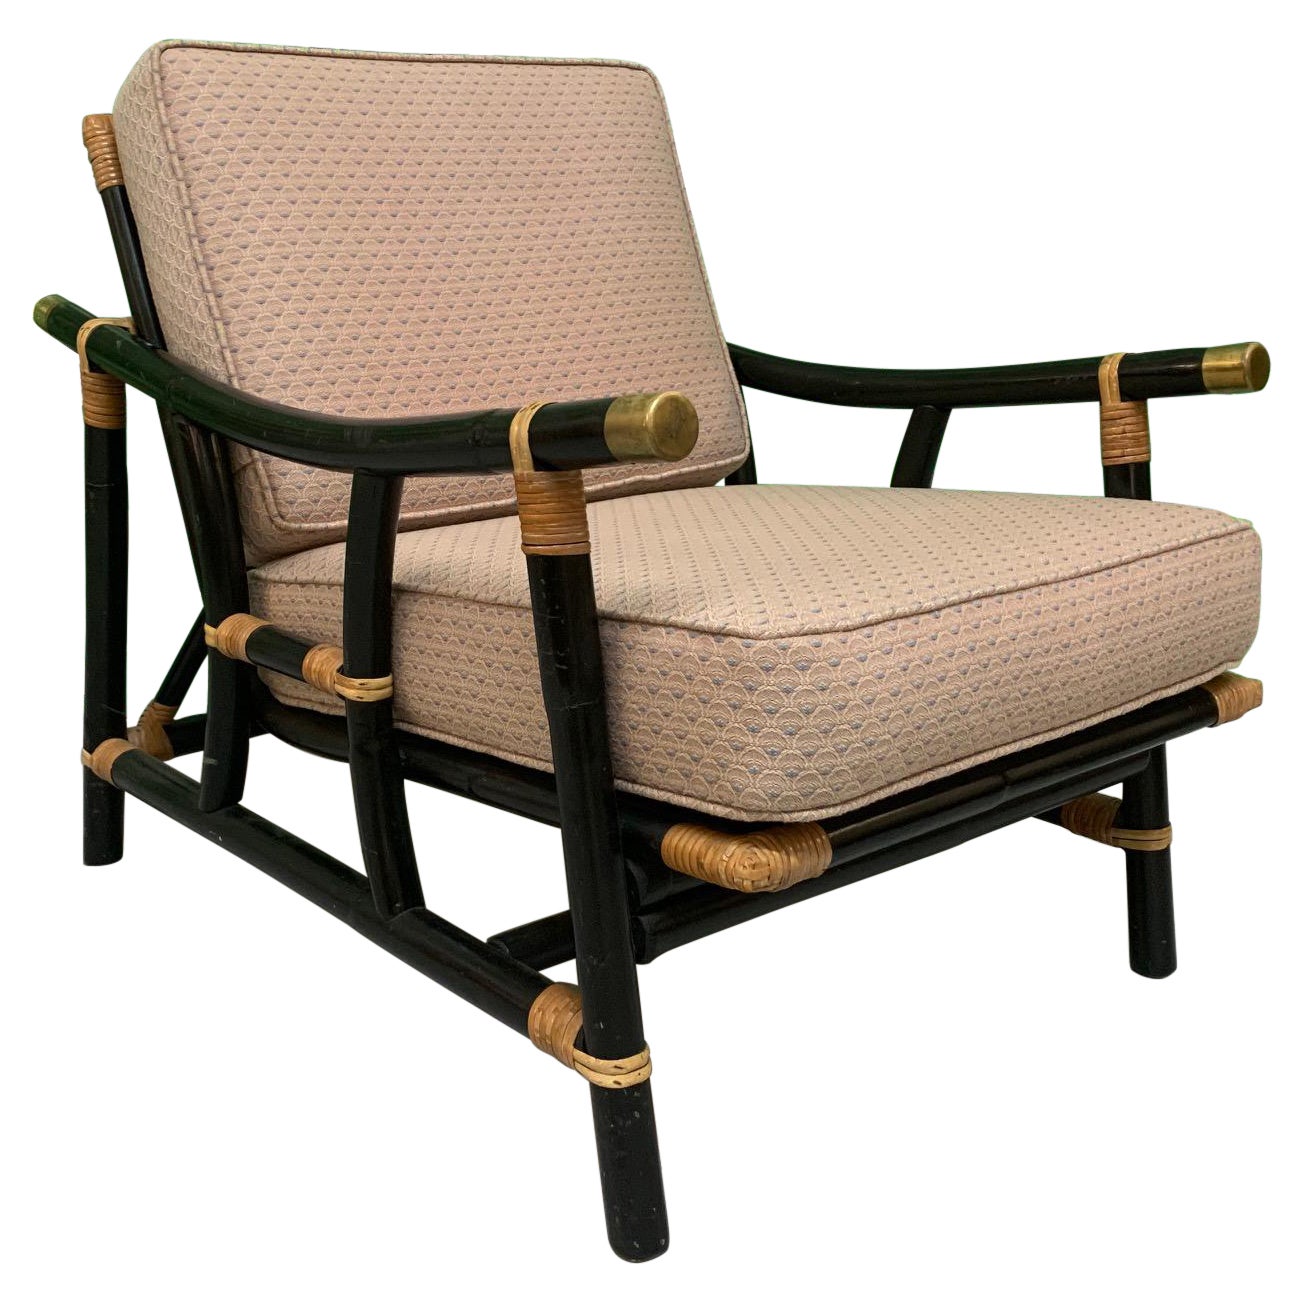 Black and Tan Rattan Lounge Chair